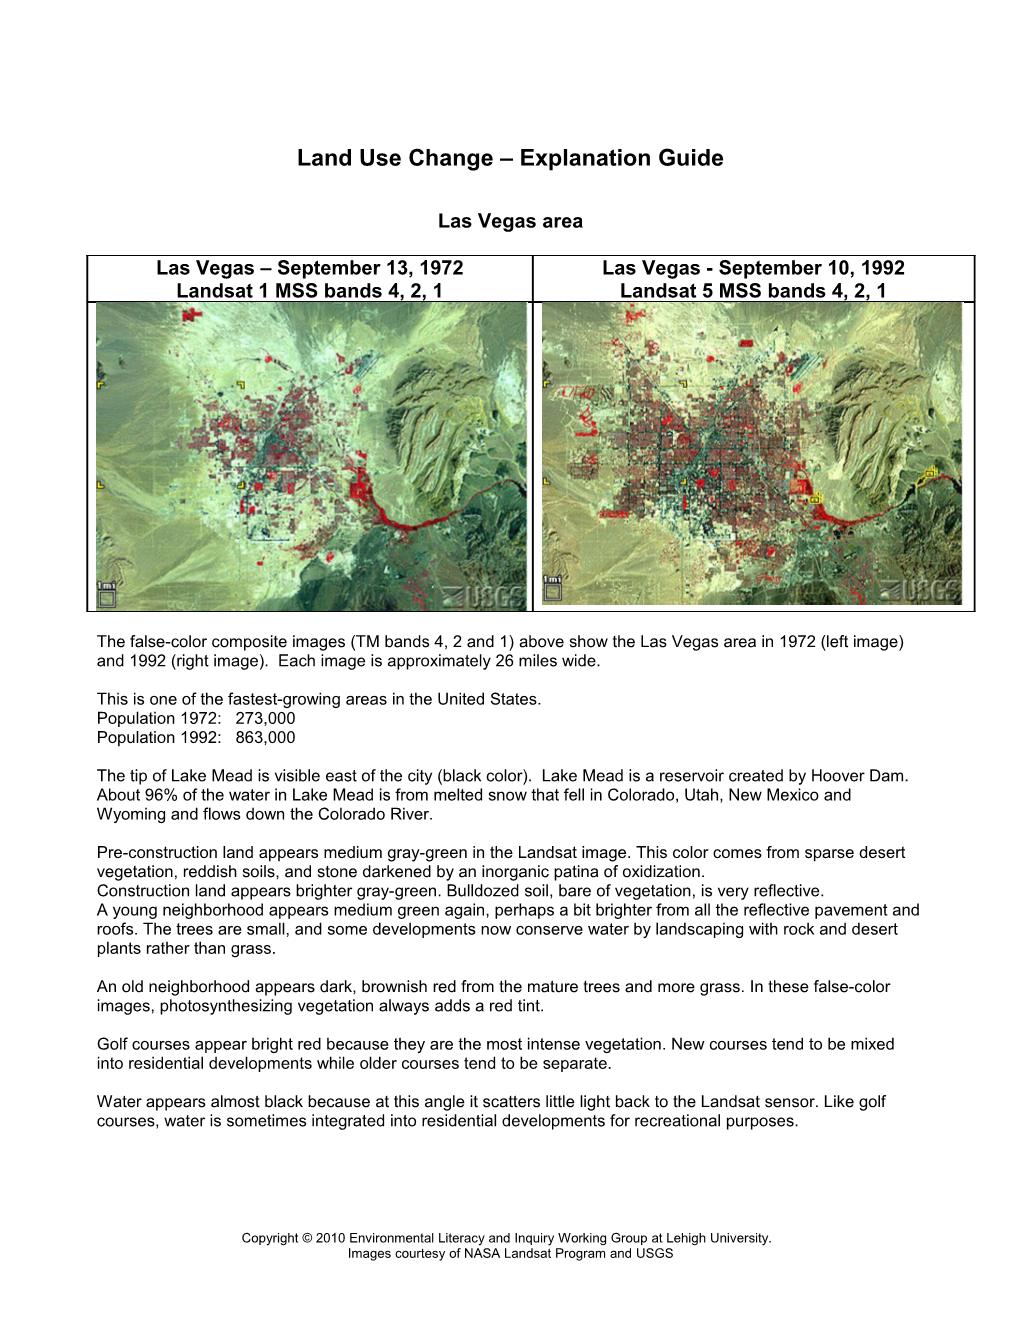 Atlanta Case Study: Thermal Data Images